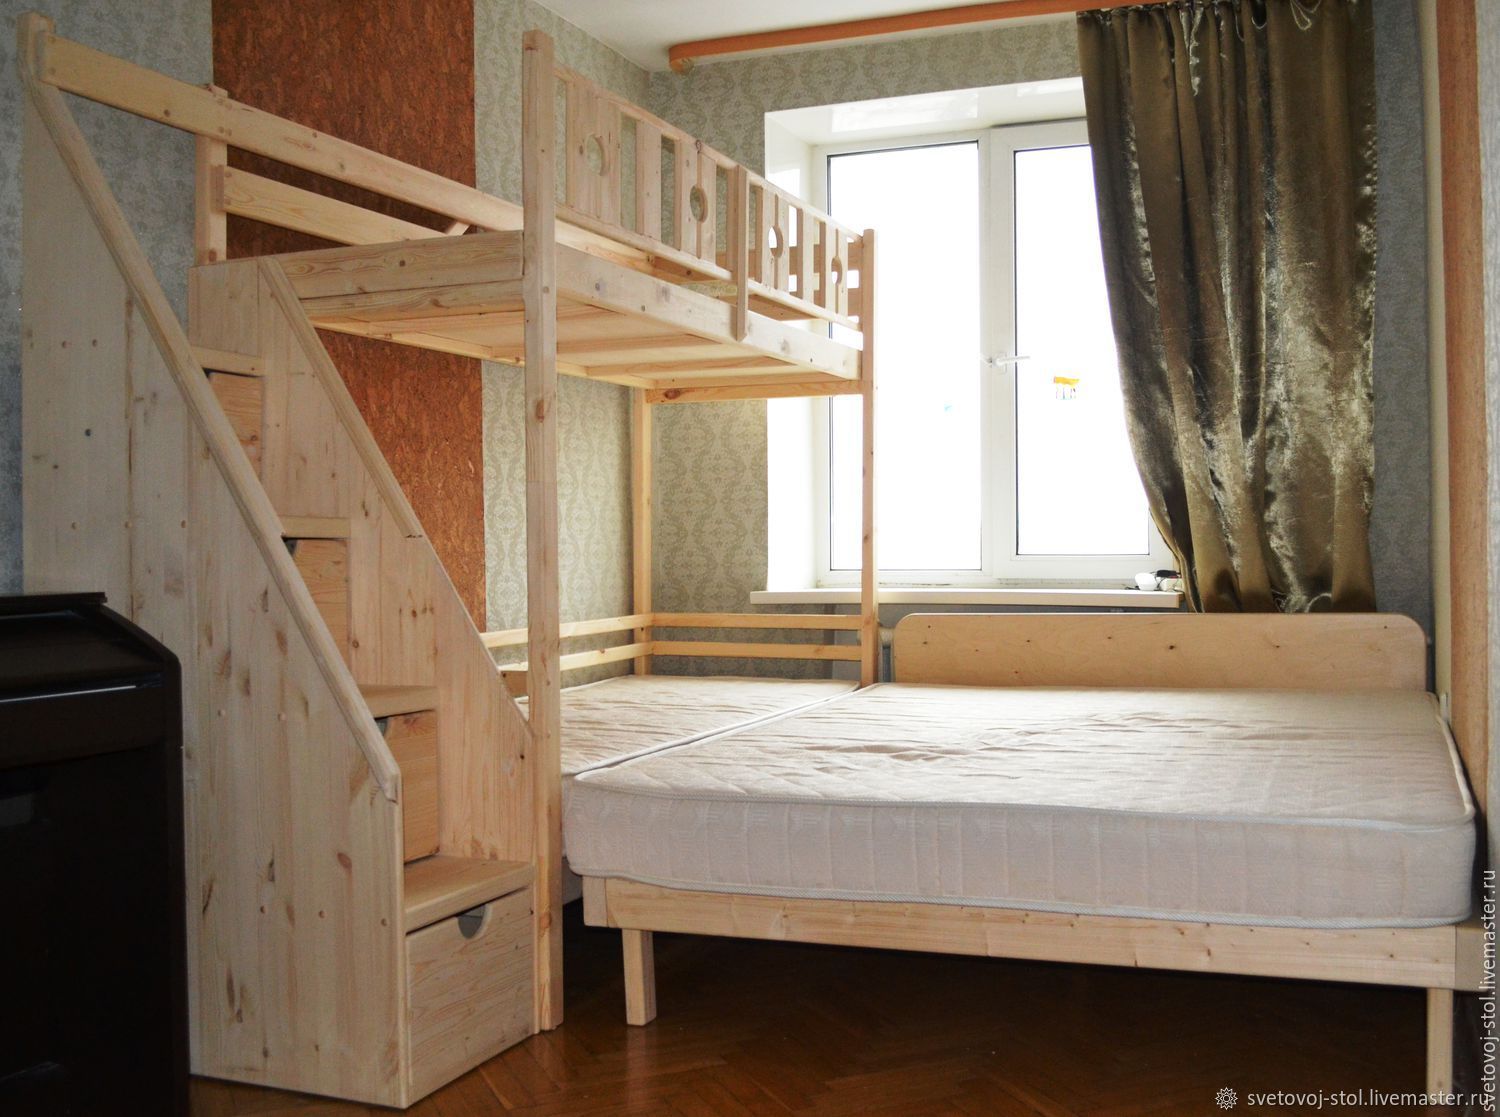 Лестница для кровати двухъярусной своими руками из дерева